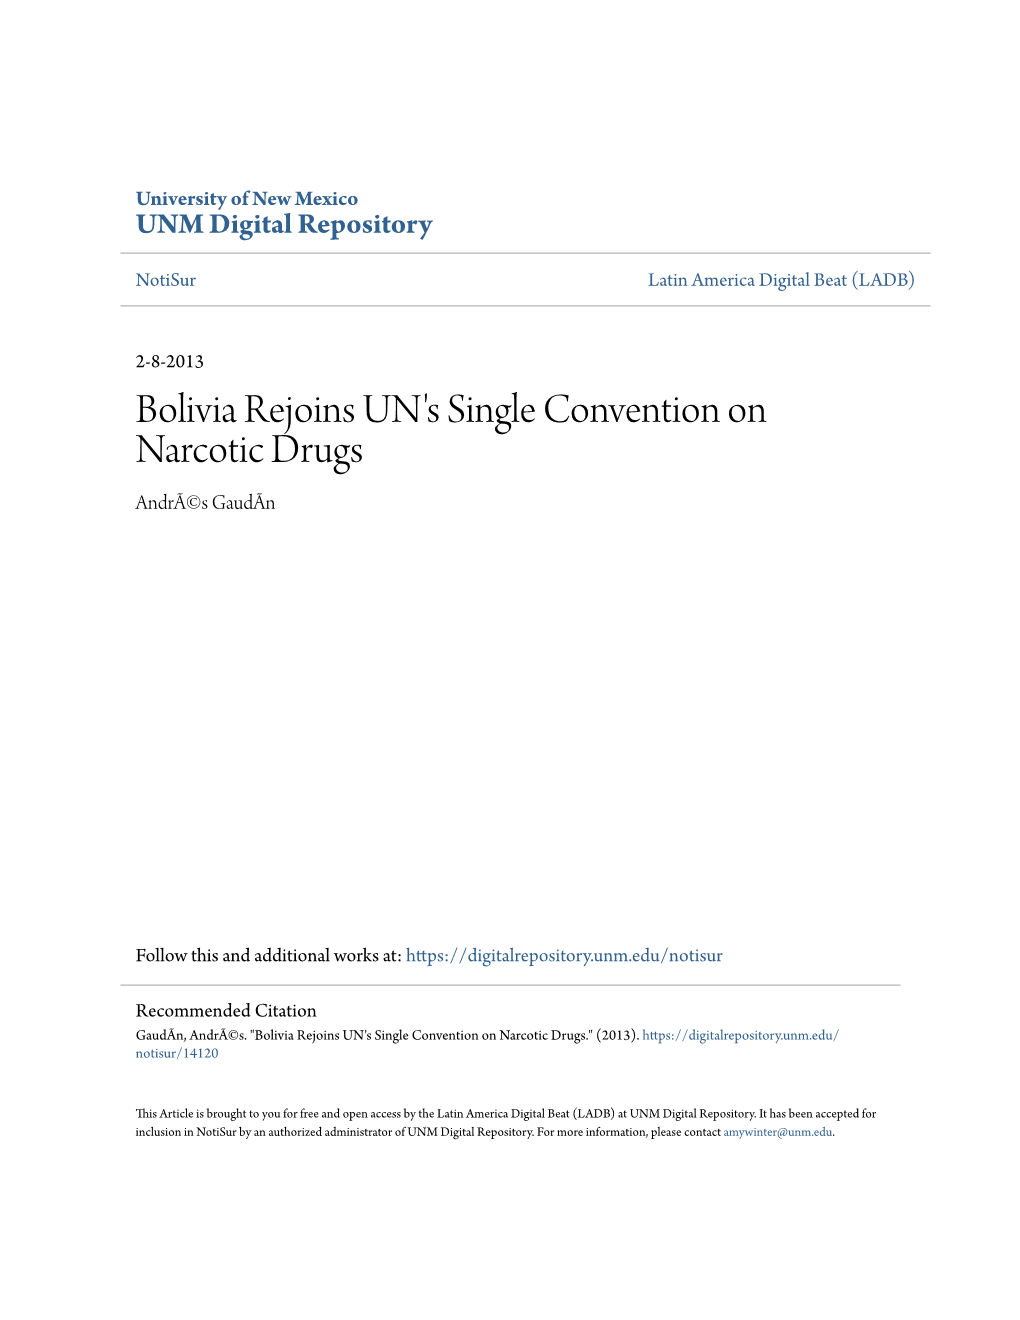 Bolivia Rejoins UN's Single Convention on Narcotic Drugs Andrã©S Gaudãn